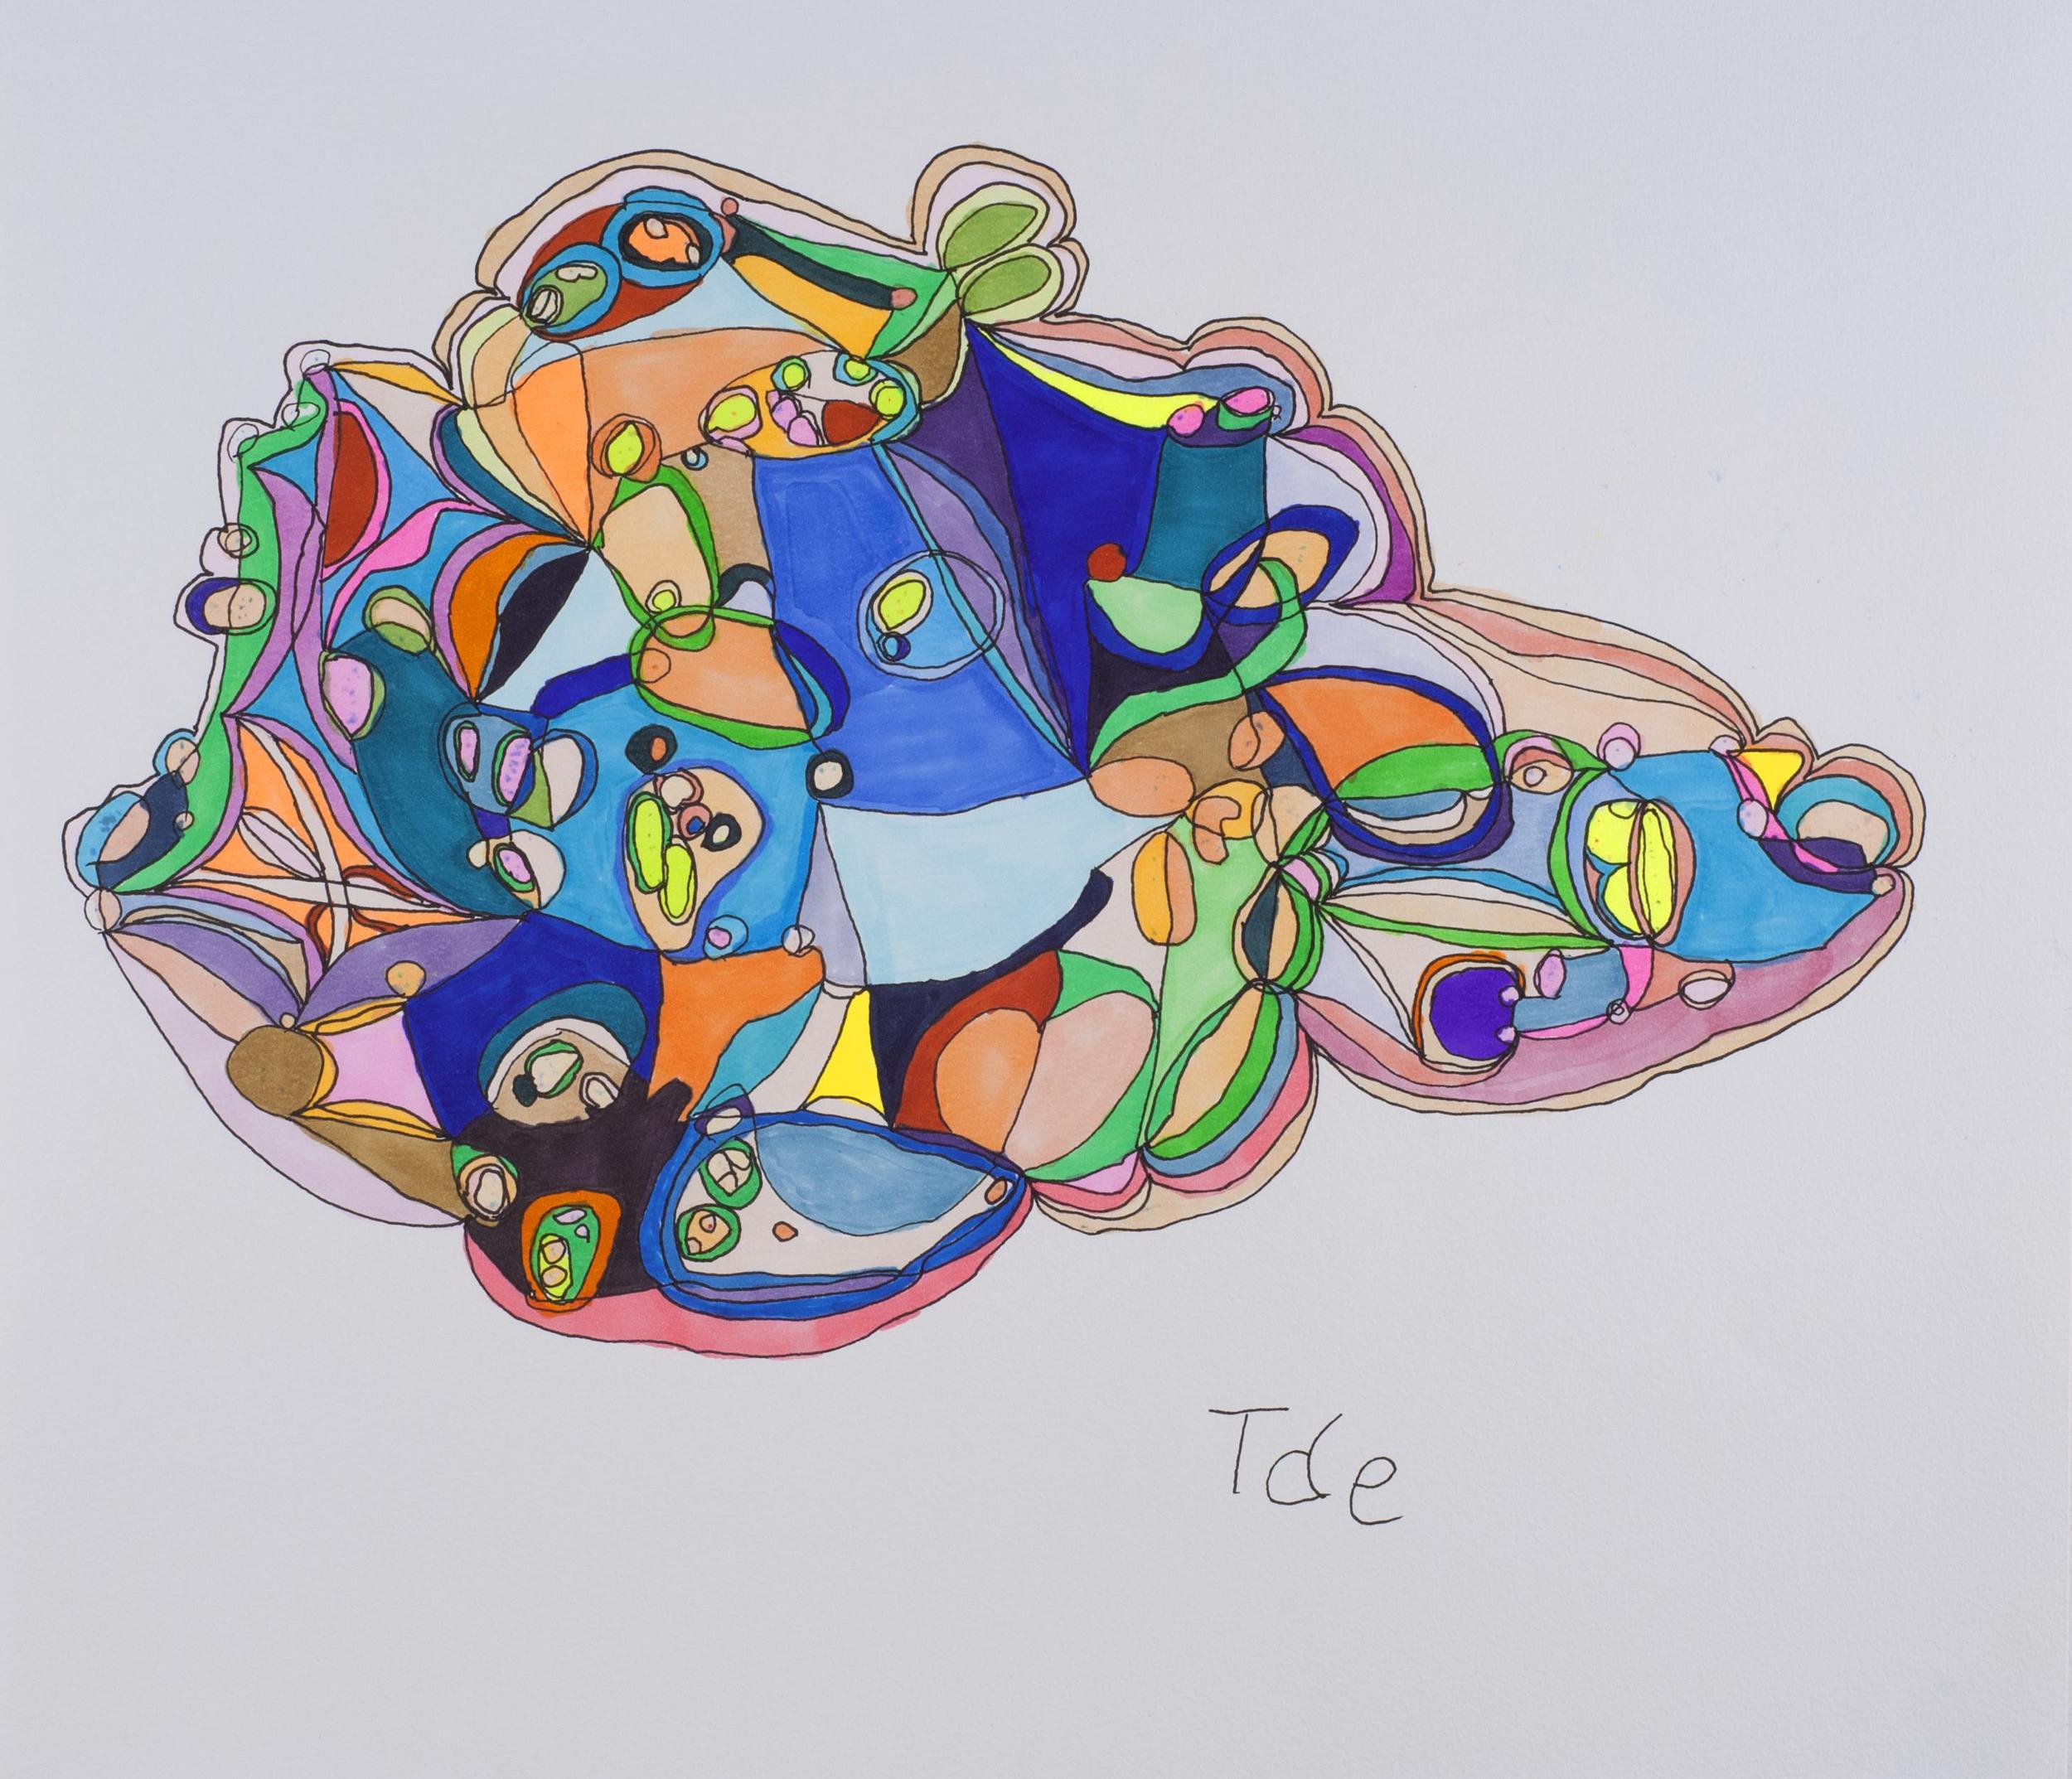   Tae Takubo    Untitled  , 2012 Marker on paper 12.8 x 14.49 inches 32.5 x 36.8 cm TTk 4 